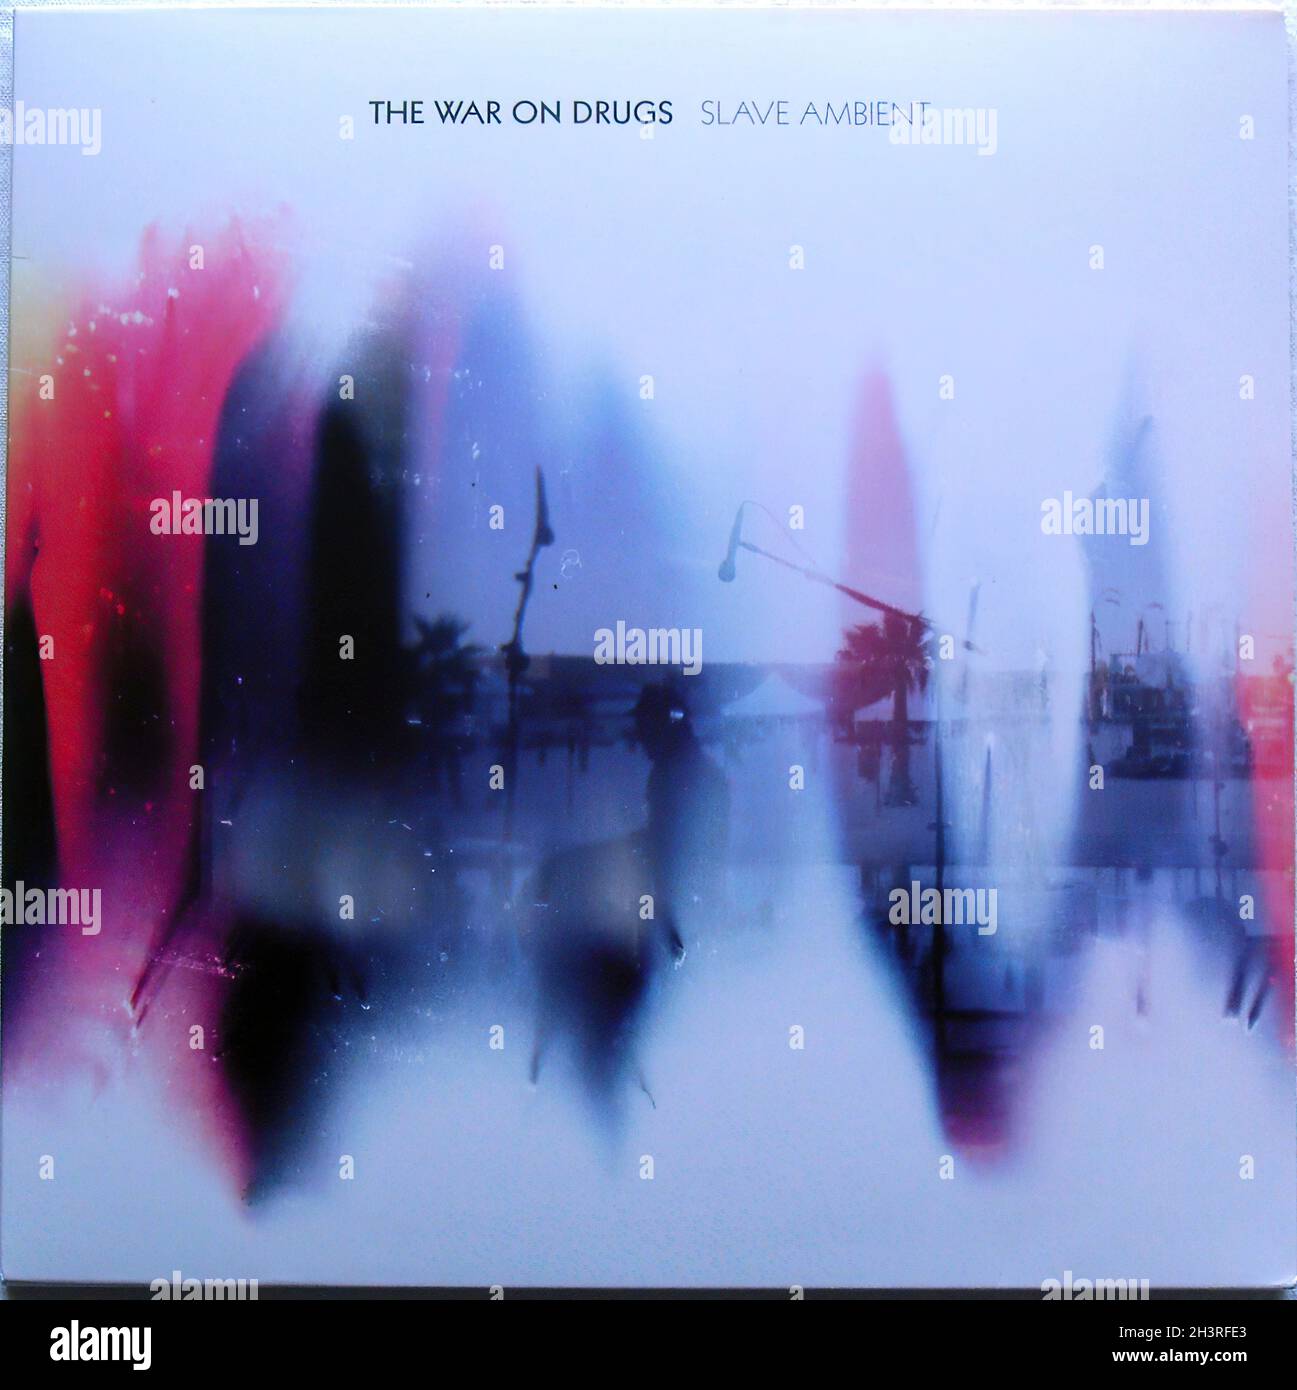 The War on Drugs 2011 Slave Ambient LP Record Vinyl Album 1 Foto Stock